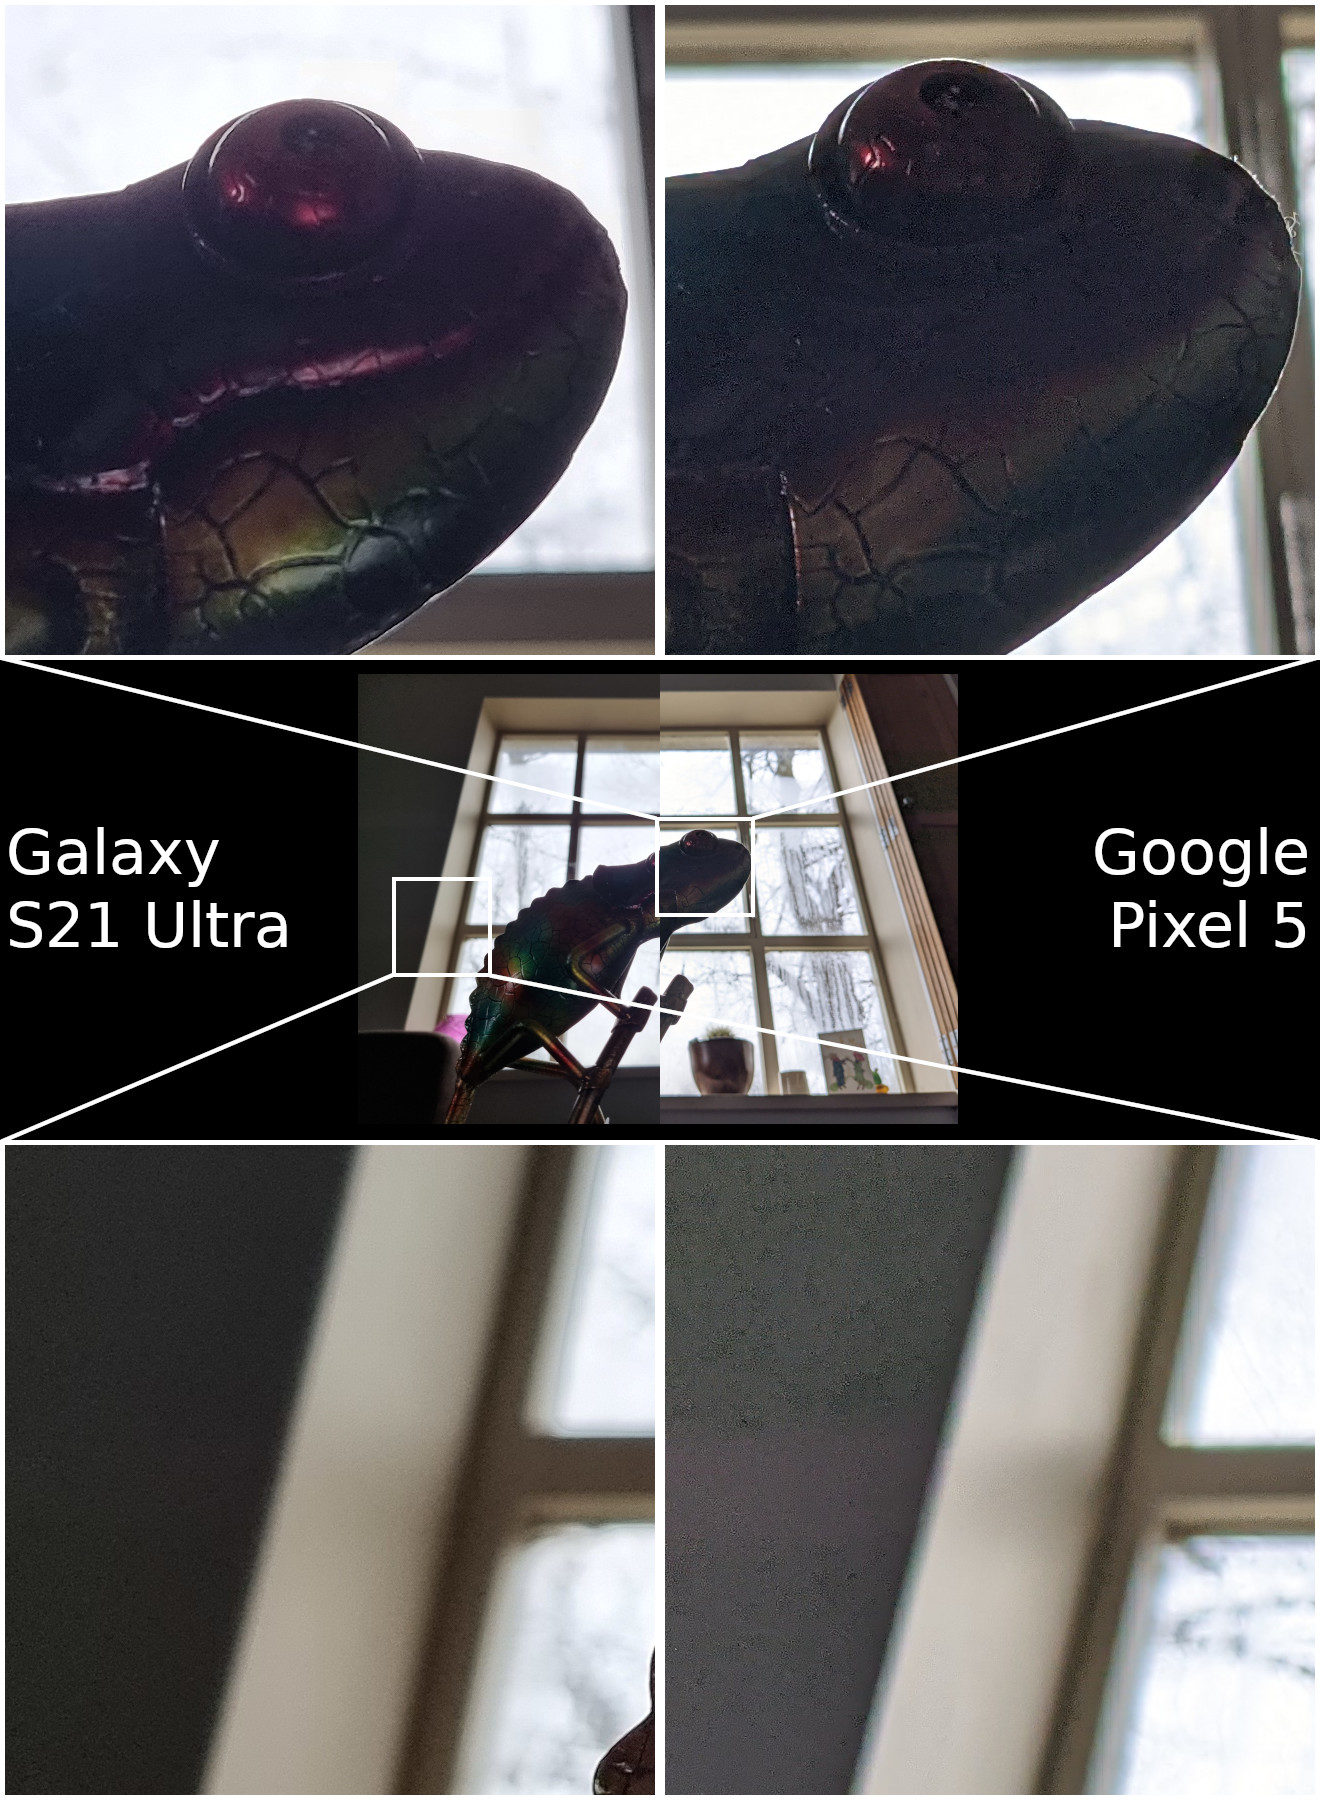 HDR Samsung Galaxy S21 Ultra vs Google Pixel 5